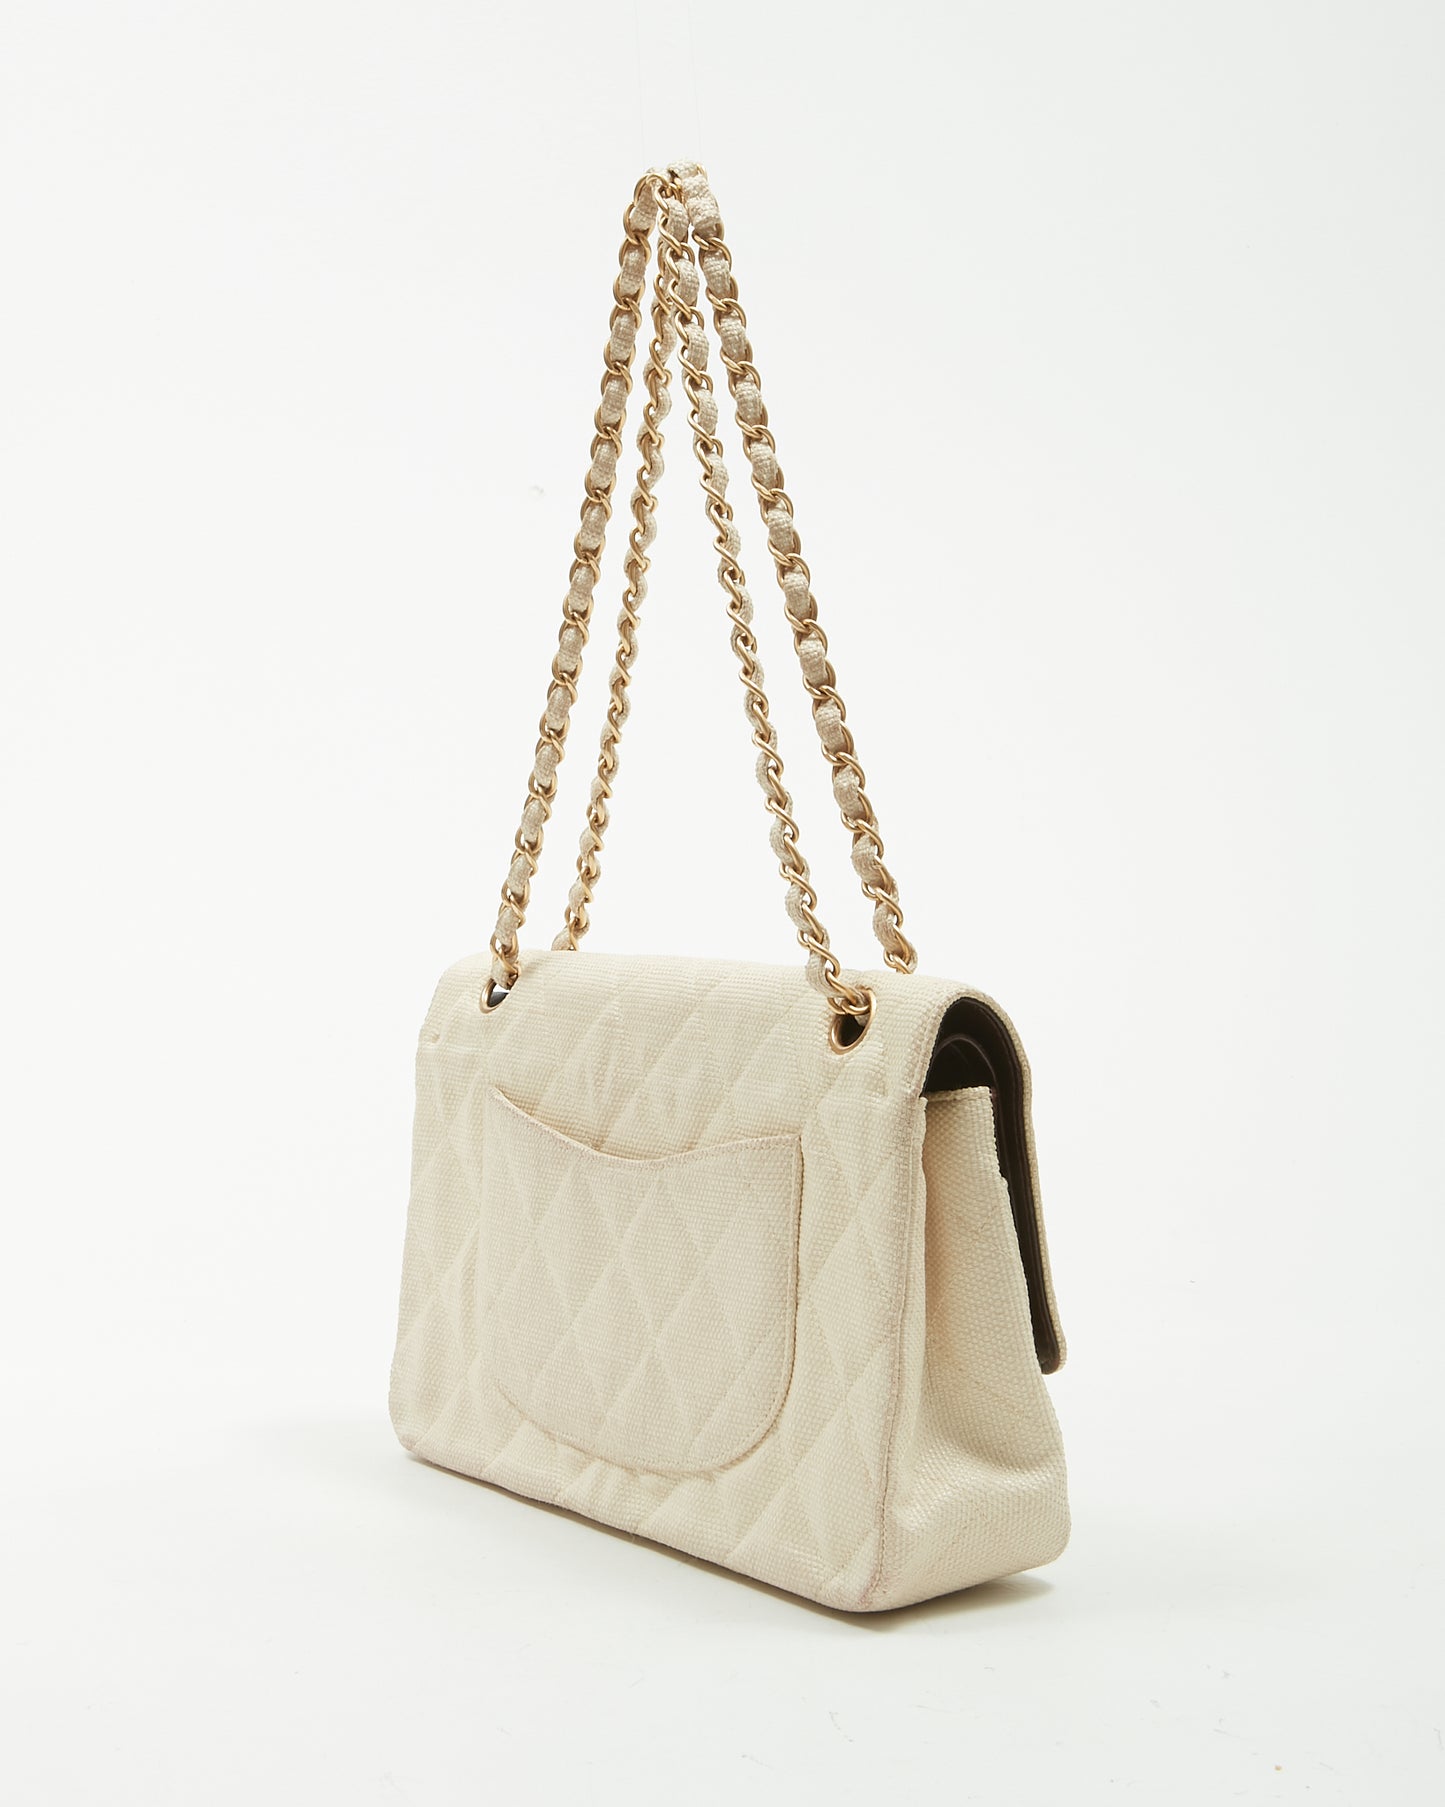 Chanel Vintage Beige Canvas Quilted Medium Double Flap Bag